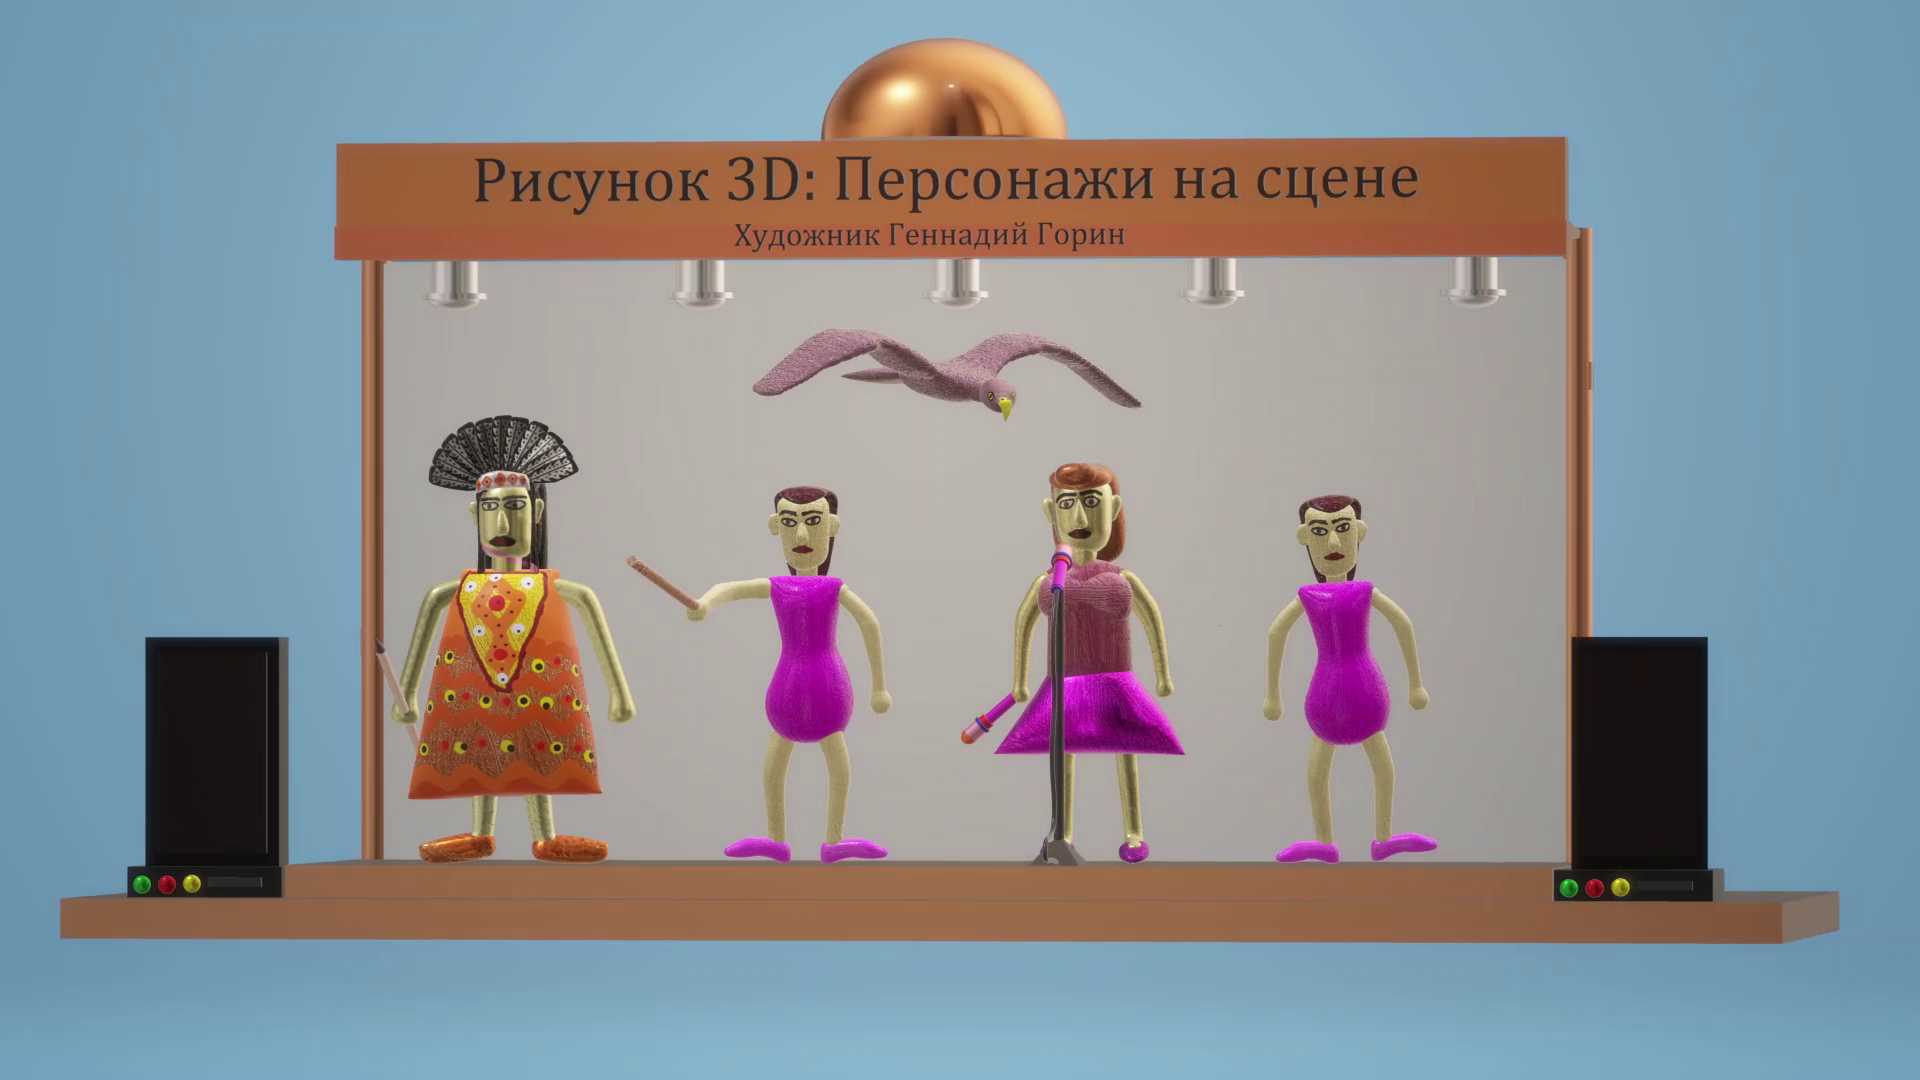 Рисунок 3D: Персонажи на сцене